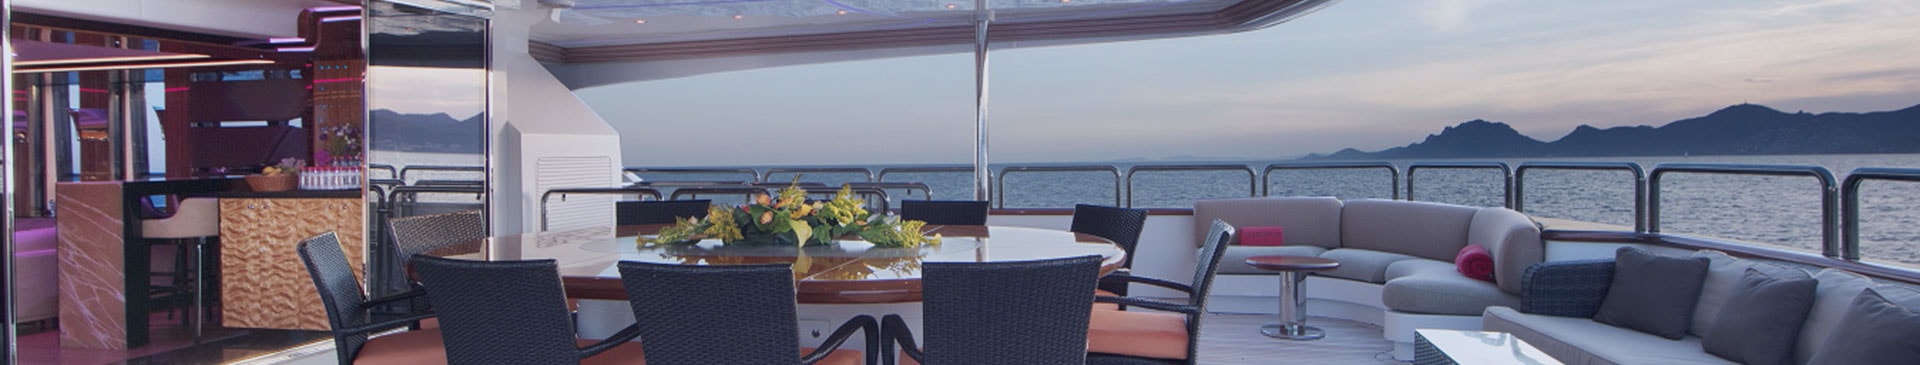 Rent These Amazing Luxury Yachts In Dubai